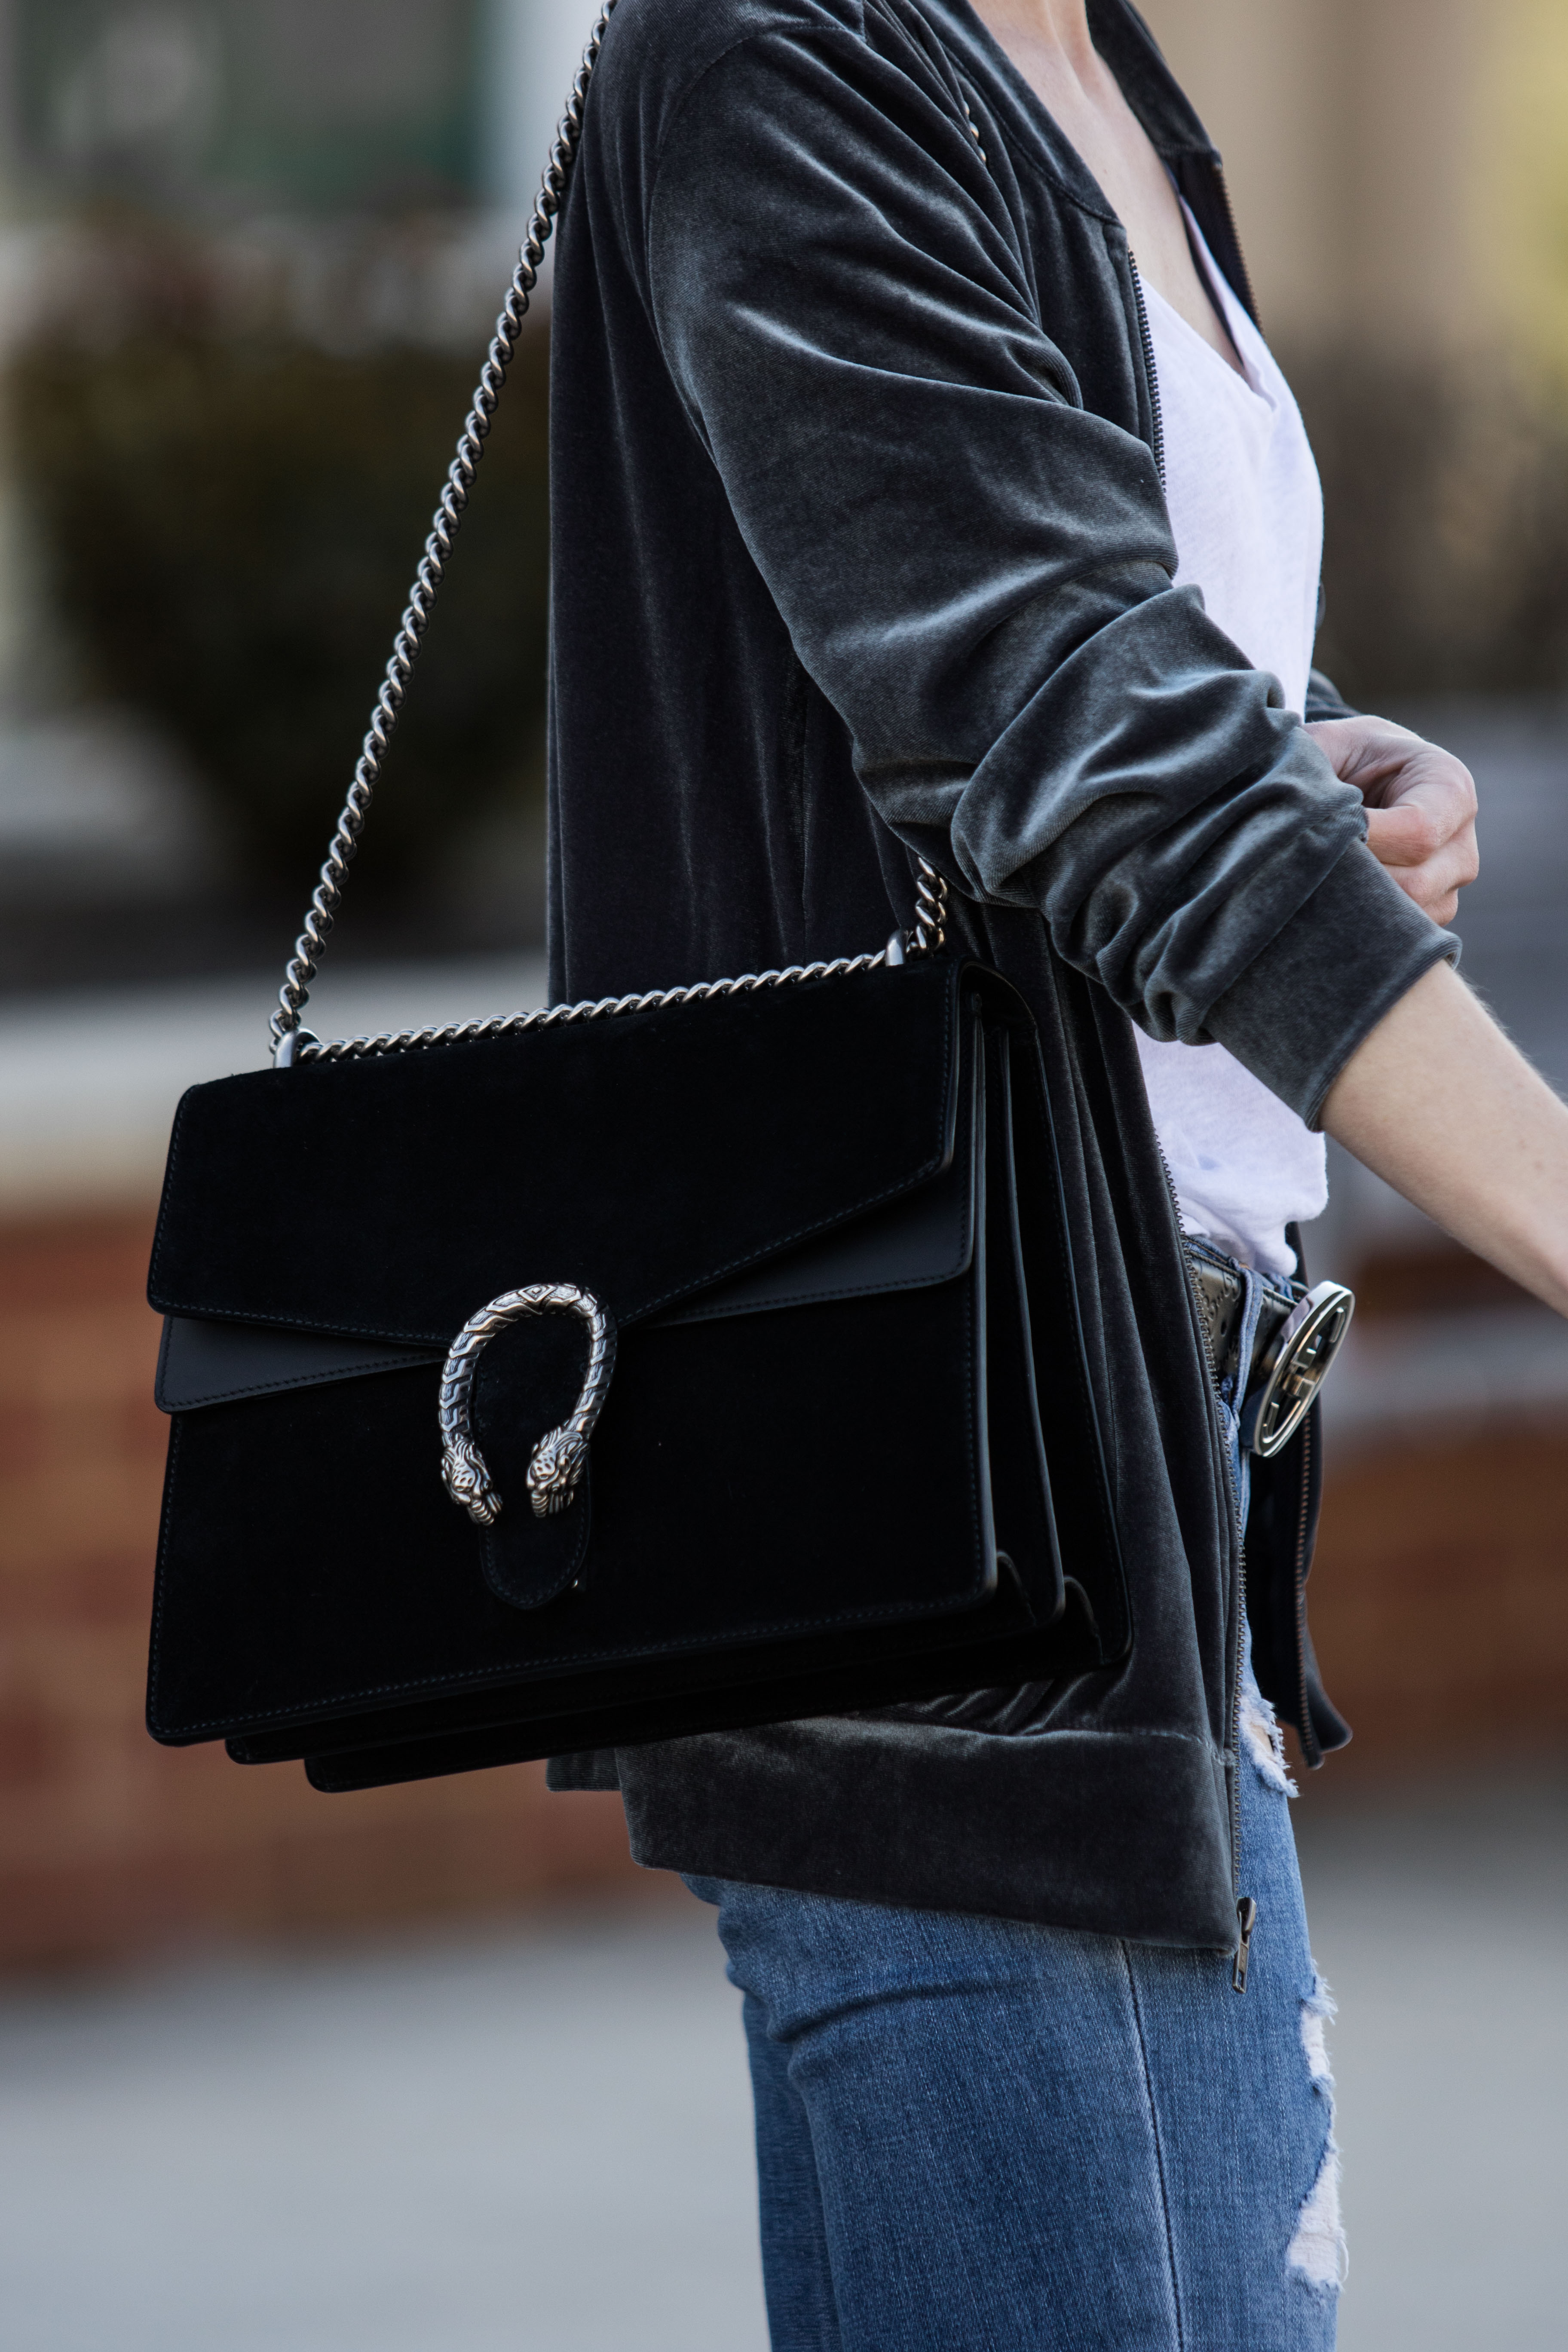 Gucci black suede Dionysus bag outfit - Meagan's Moda